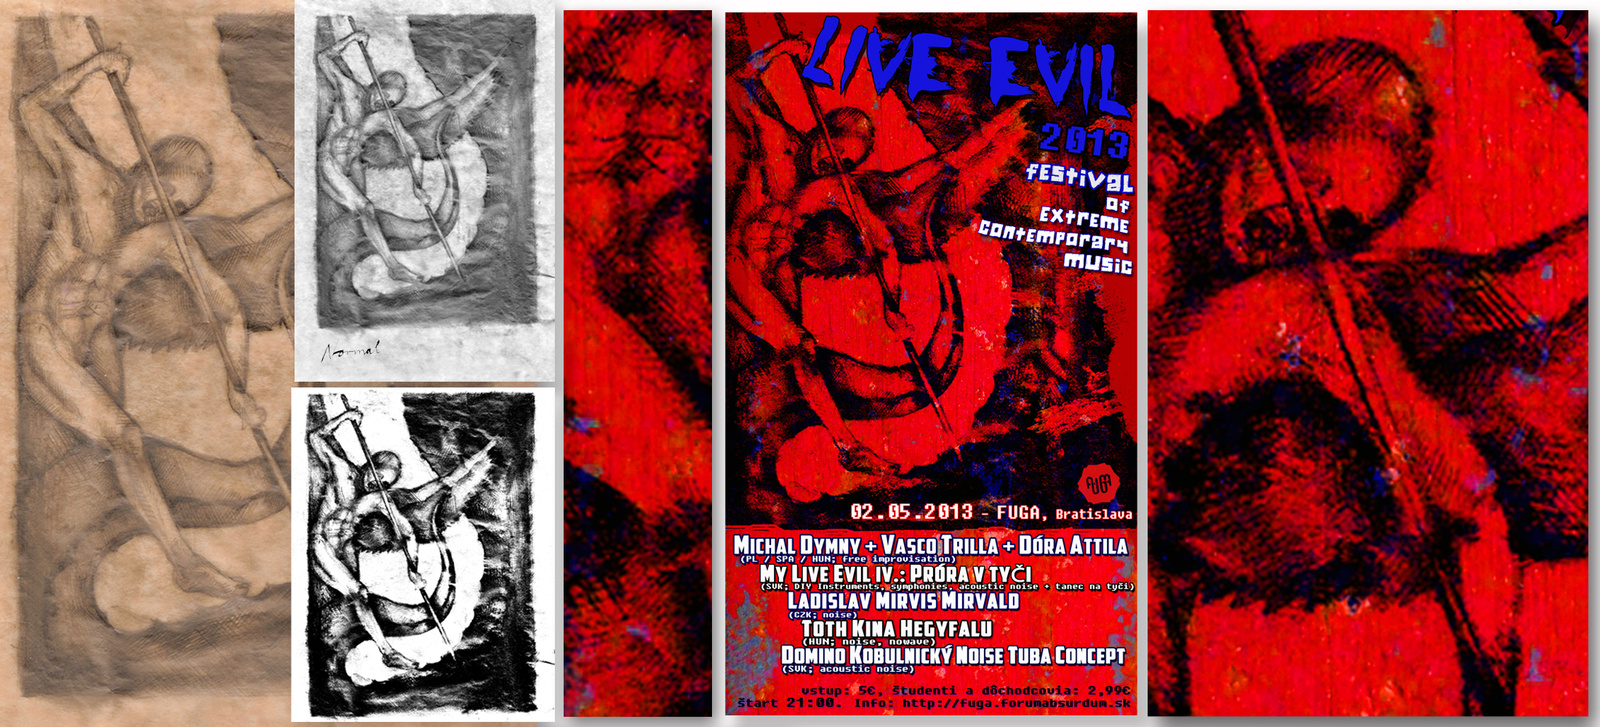 live evil 2013